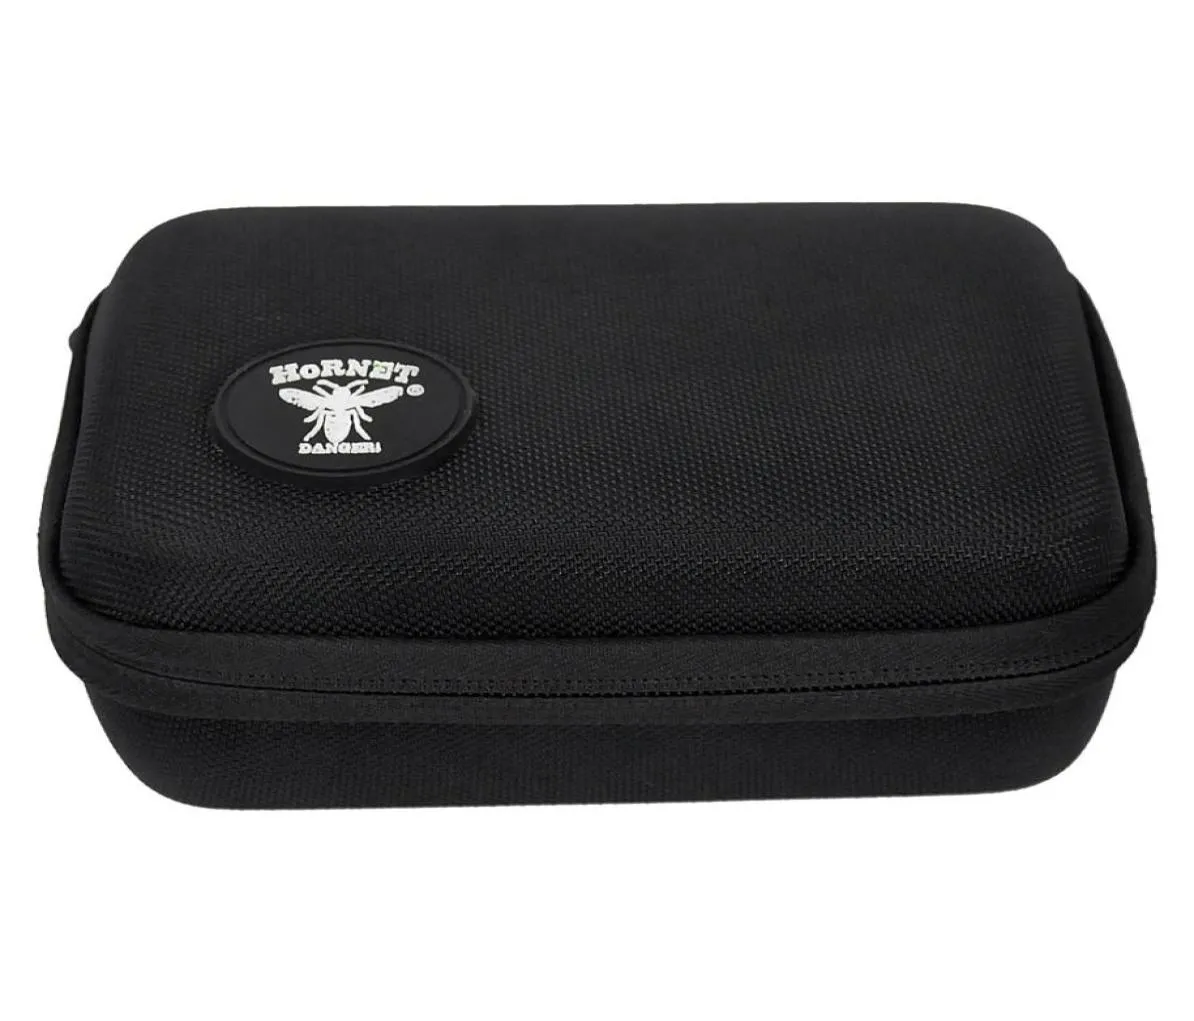 Hornet Travel Canvas Storage Bag Lukt Proof Tobacco Pouch Case Smoke Bags Cigarfodral Flera specifikationer tillgängliga4900004